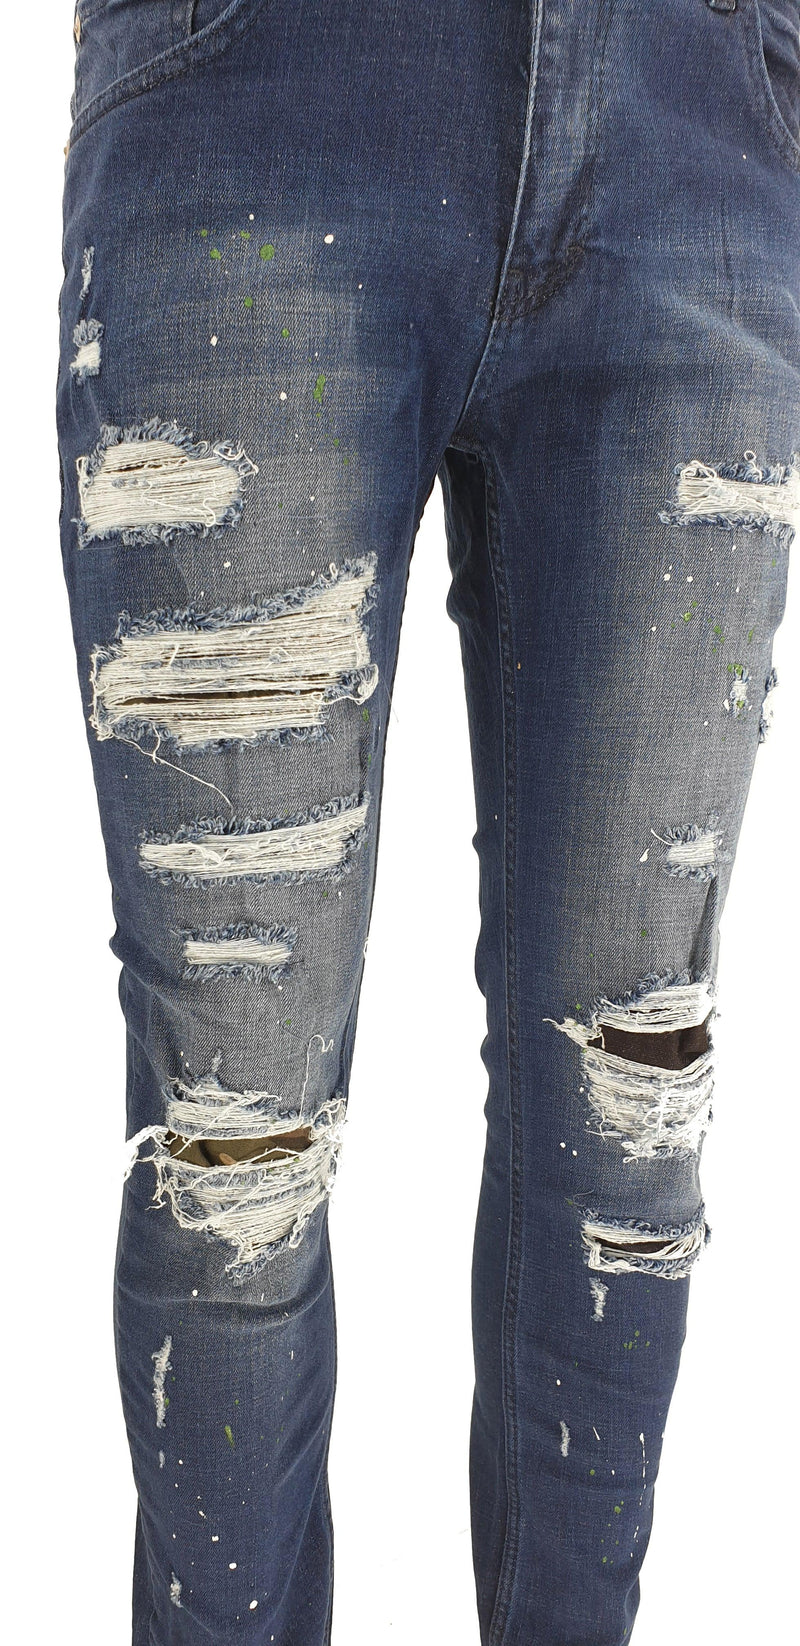 DK Paint Splatter Ripped Jeans